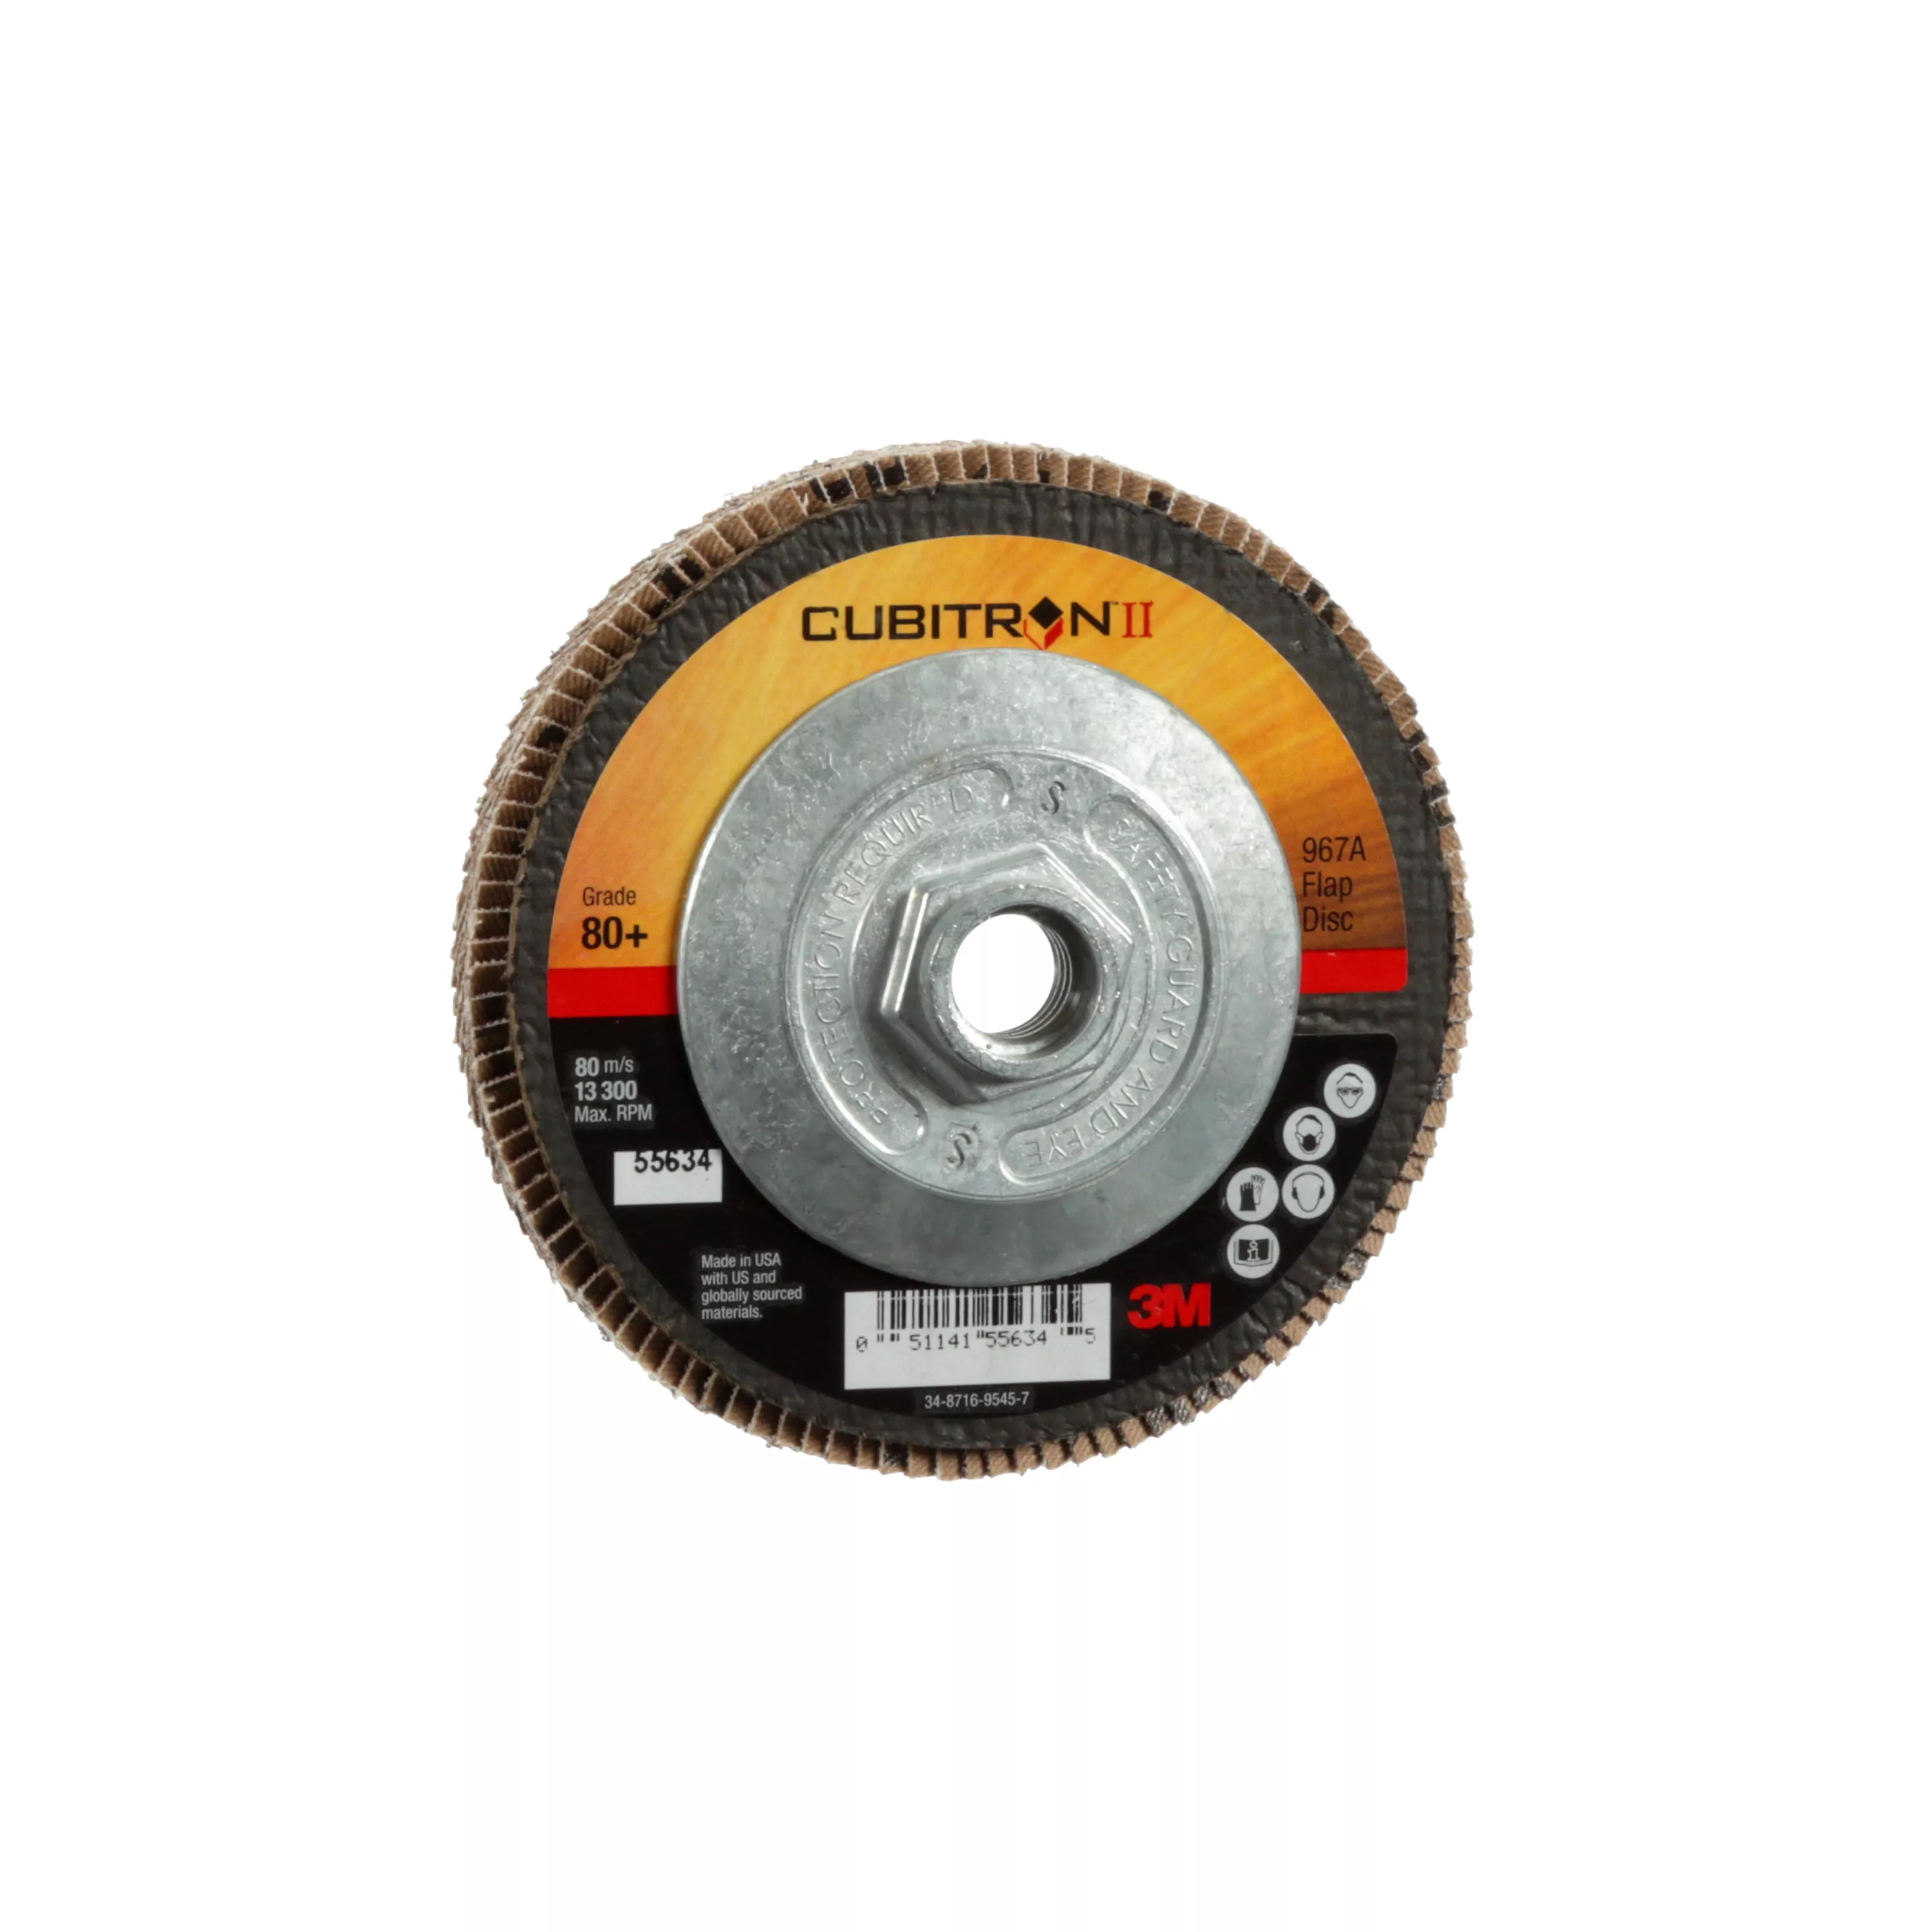 SKU 7010294535 | 3M™ Cubitron™ II Flap Disc 967A